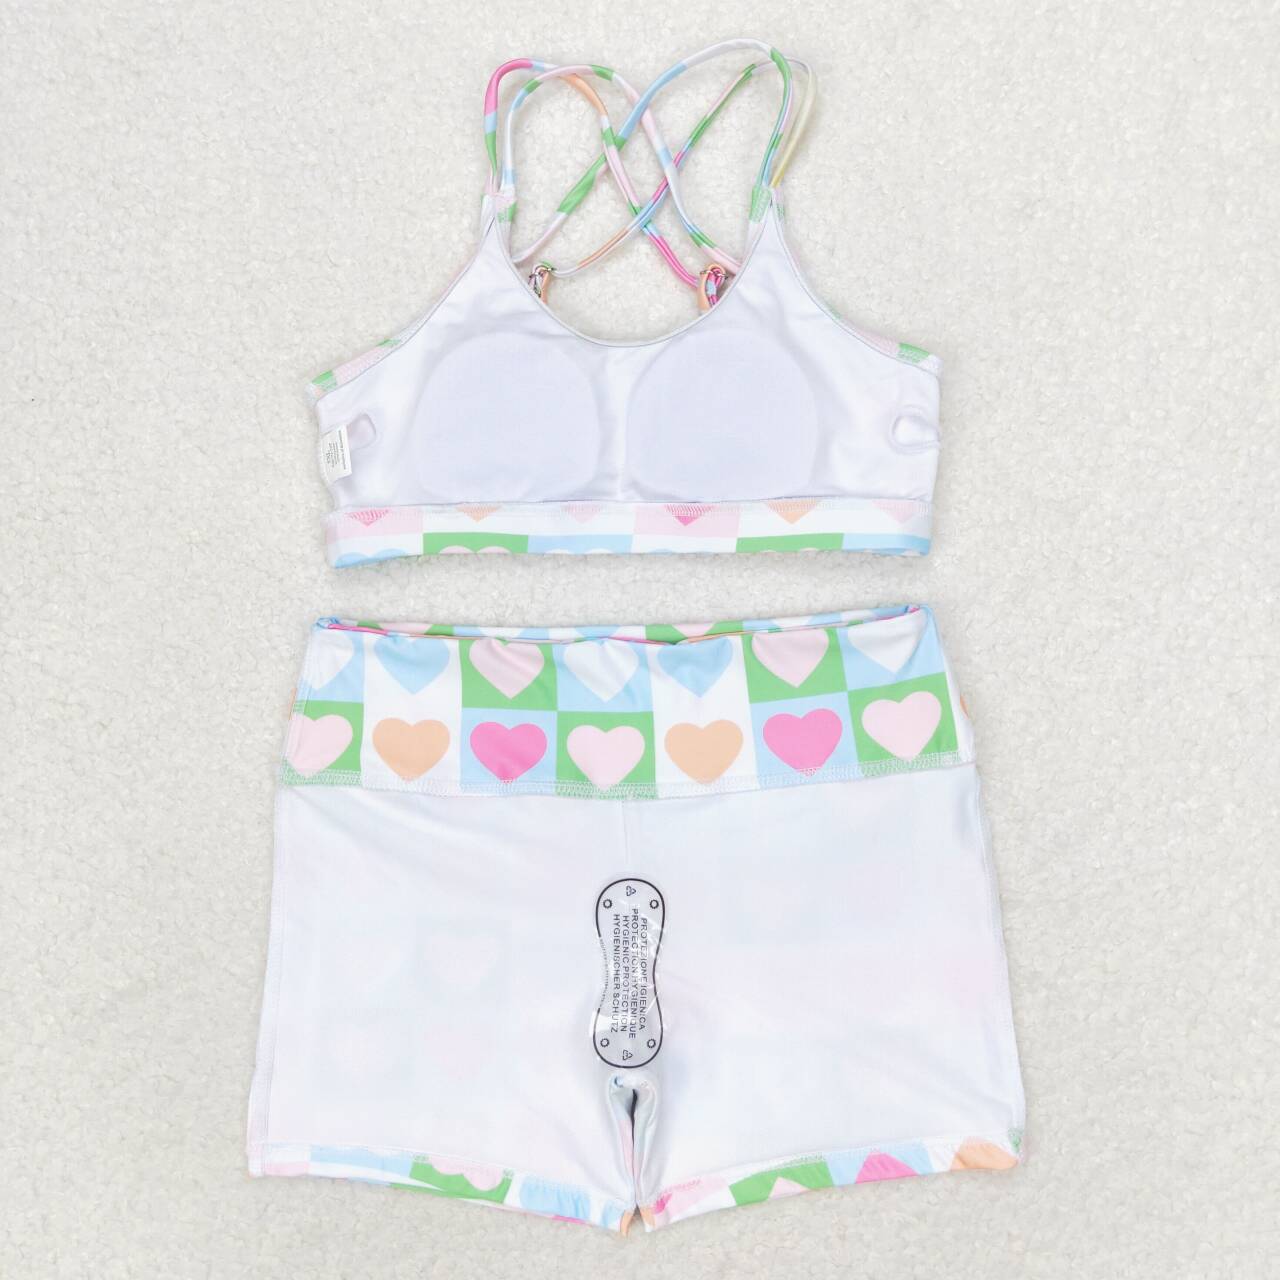 S0373 Colorful Heart Plaid Print Girls 2 Pieces Vests Swimsuit